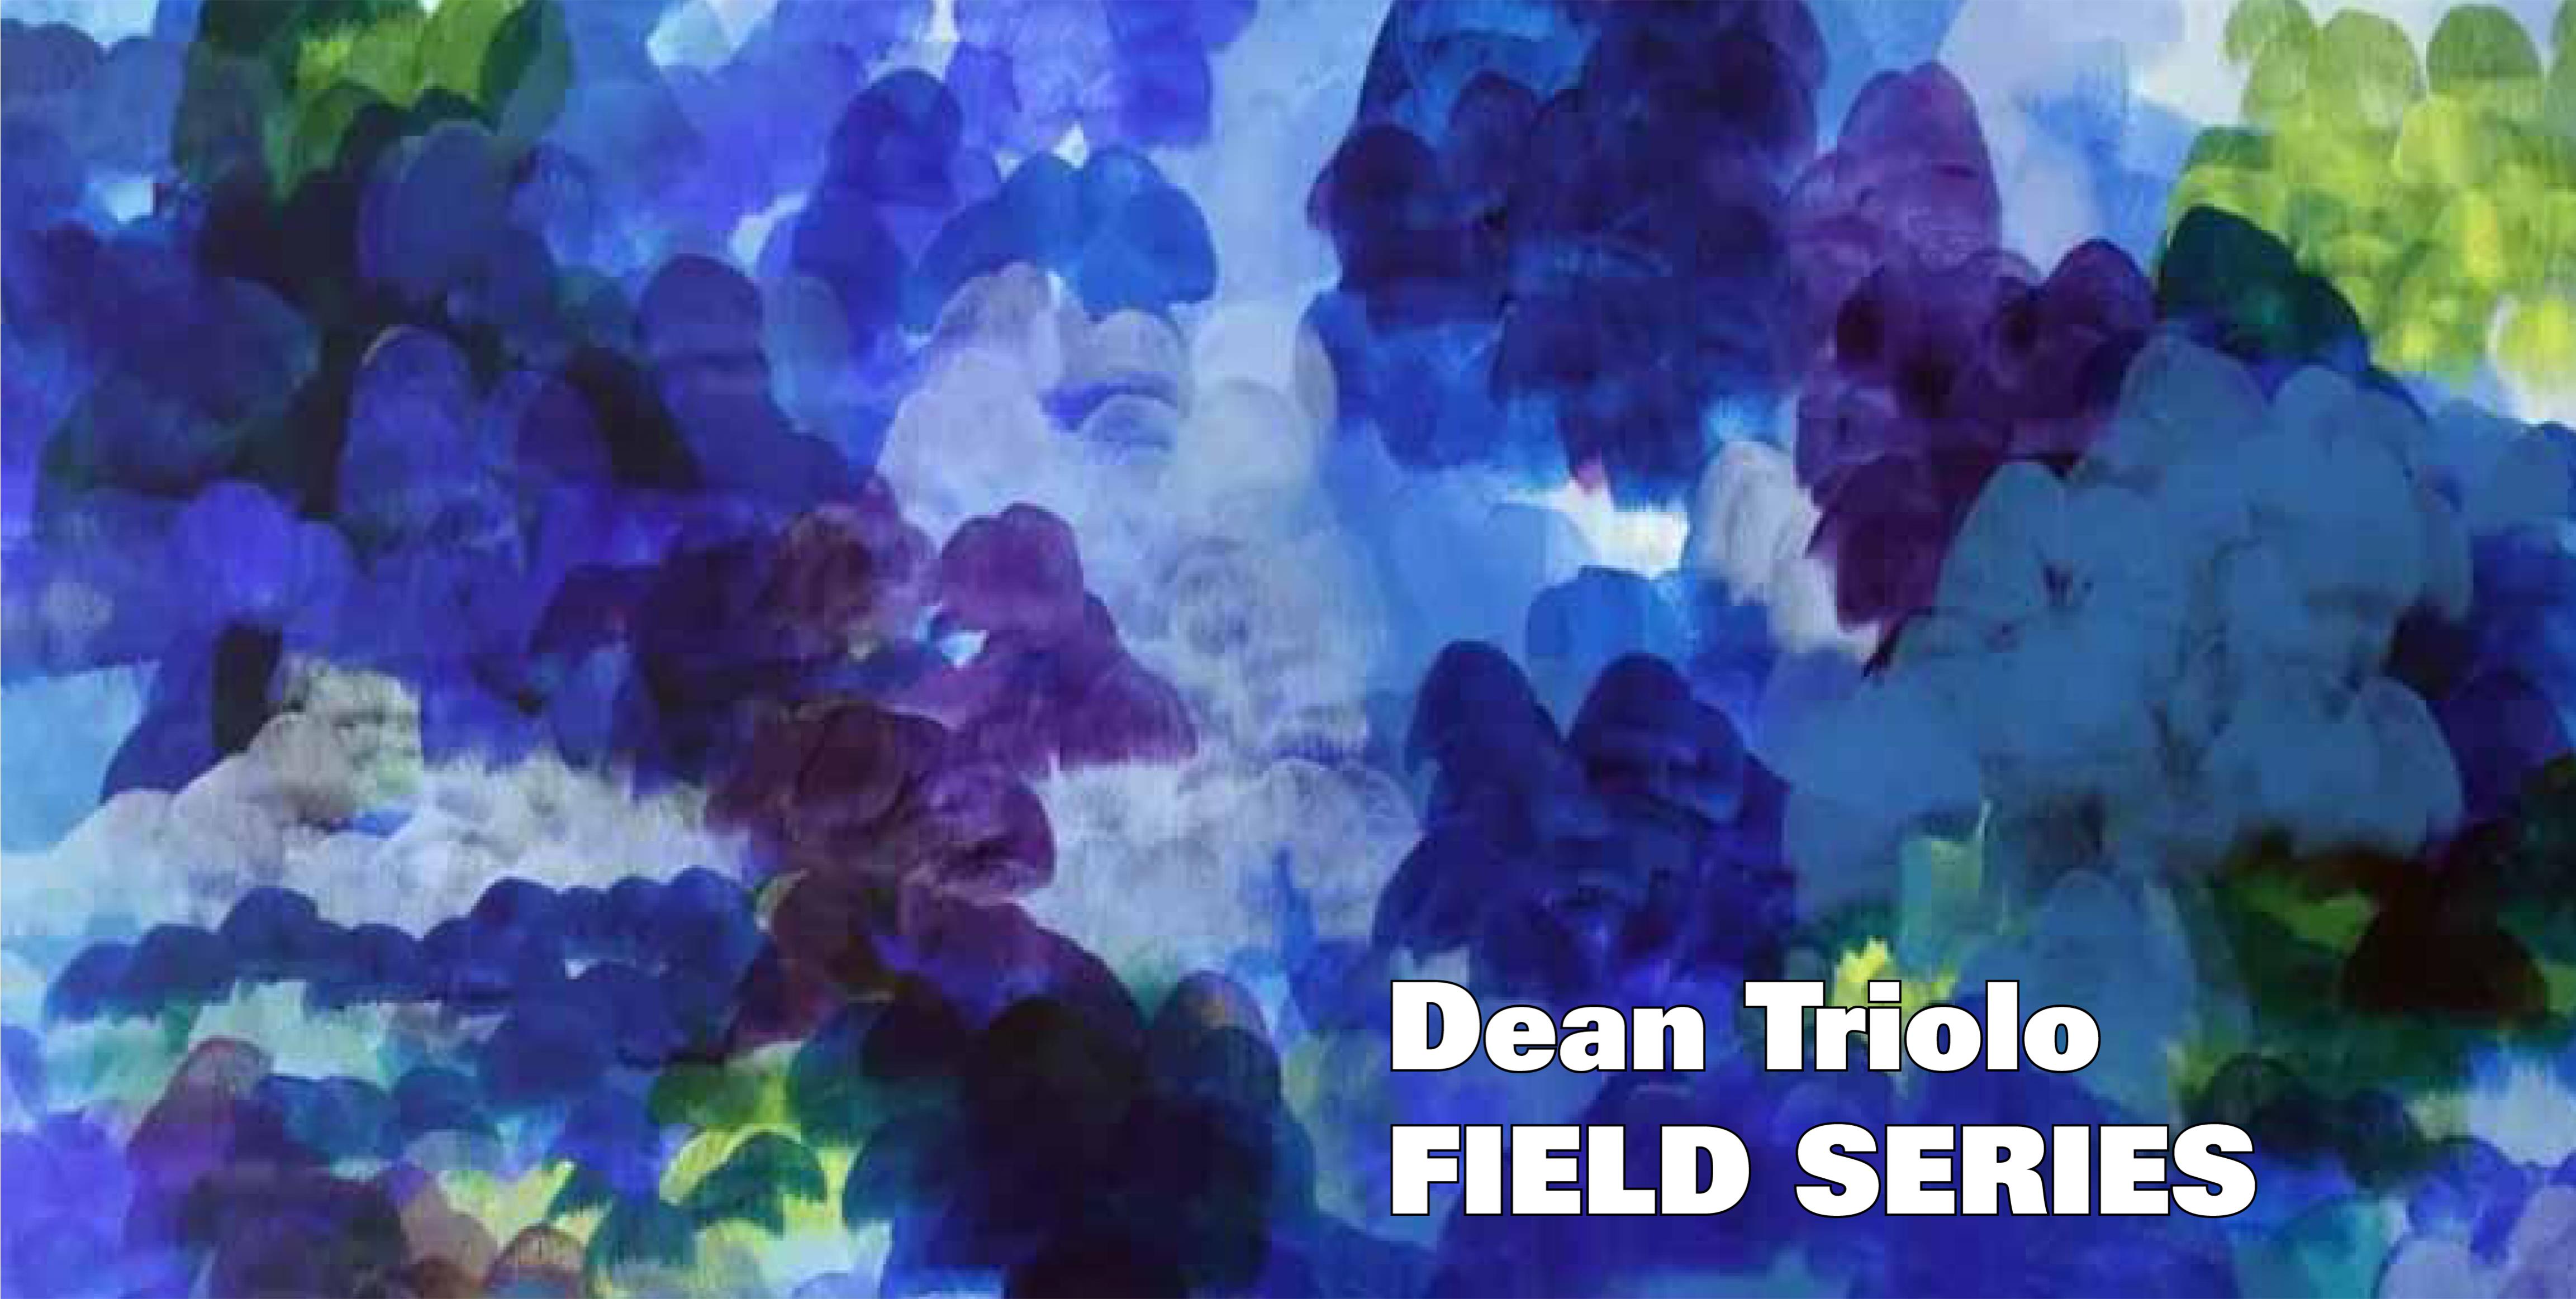 Dean Triolo The Field Series cover image